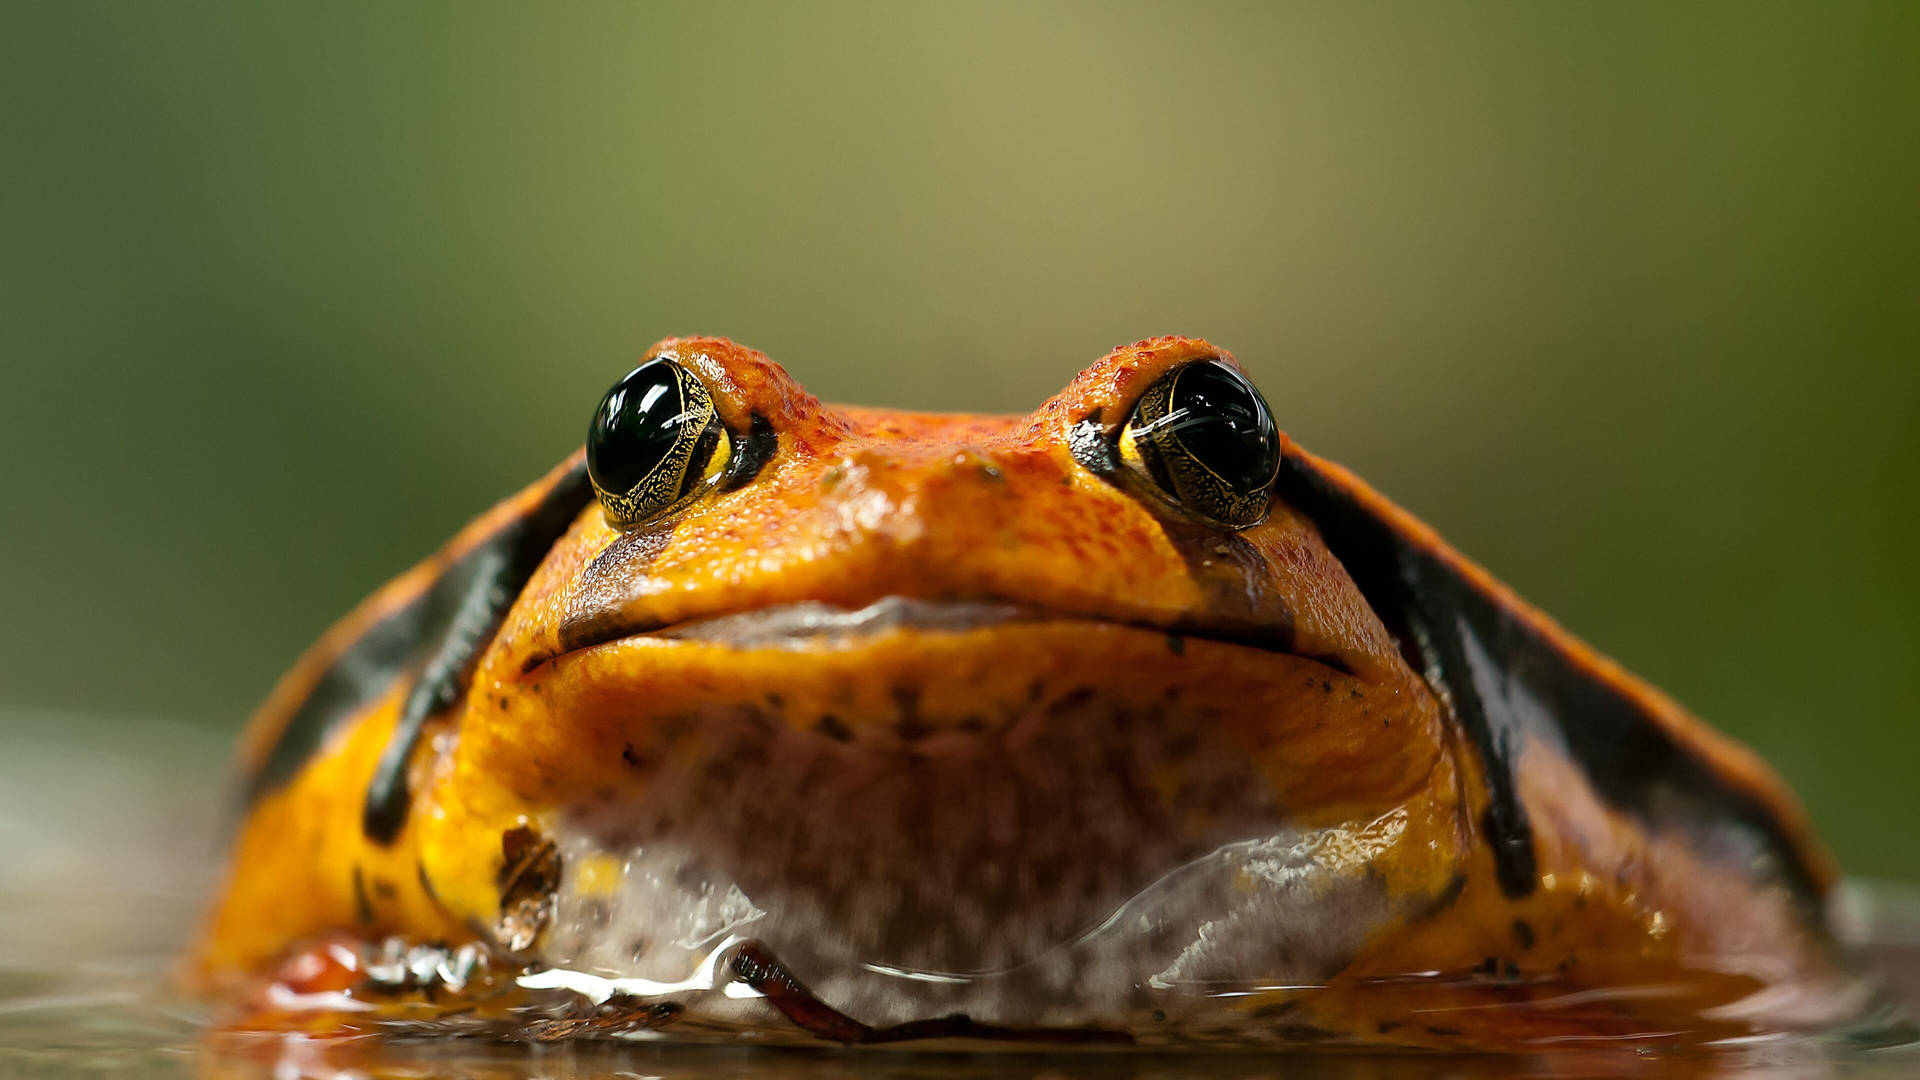 Kawaii Frog With Big Eyes Background